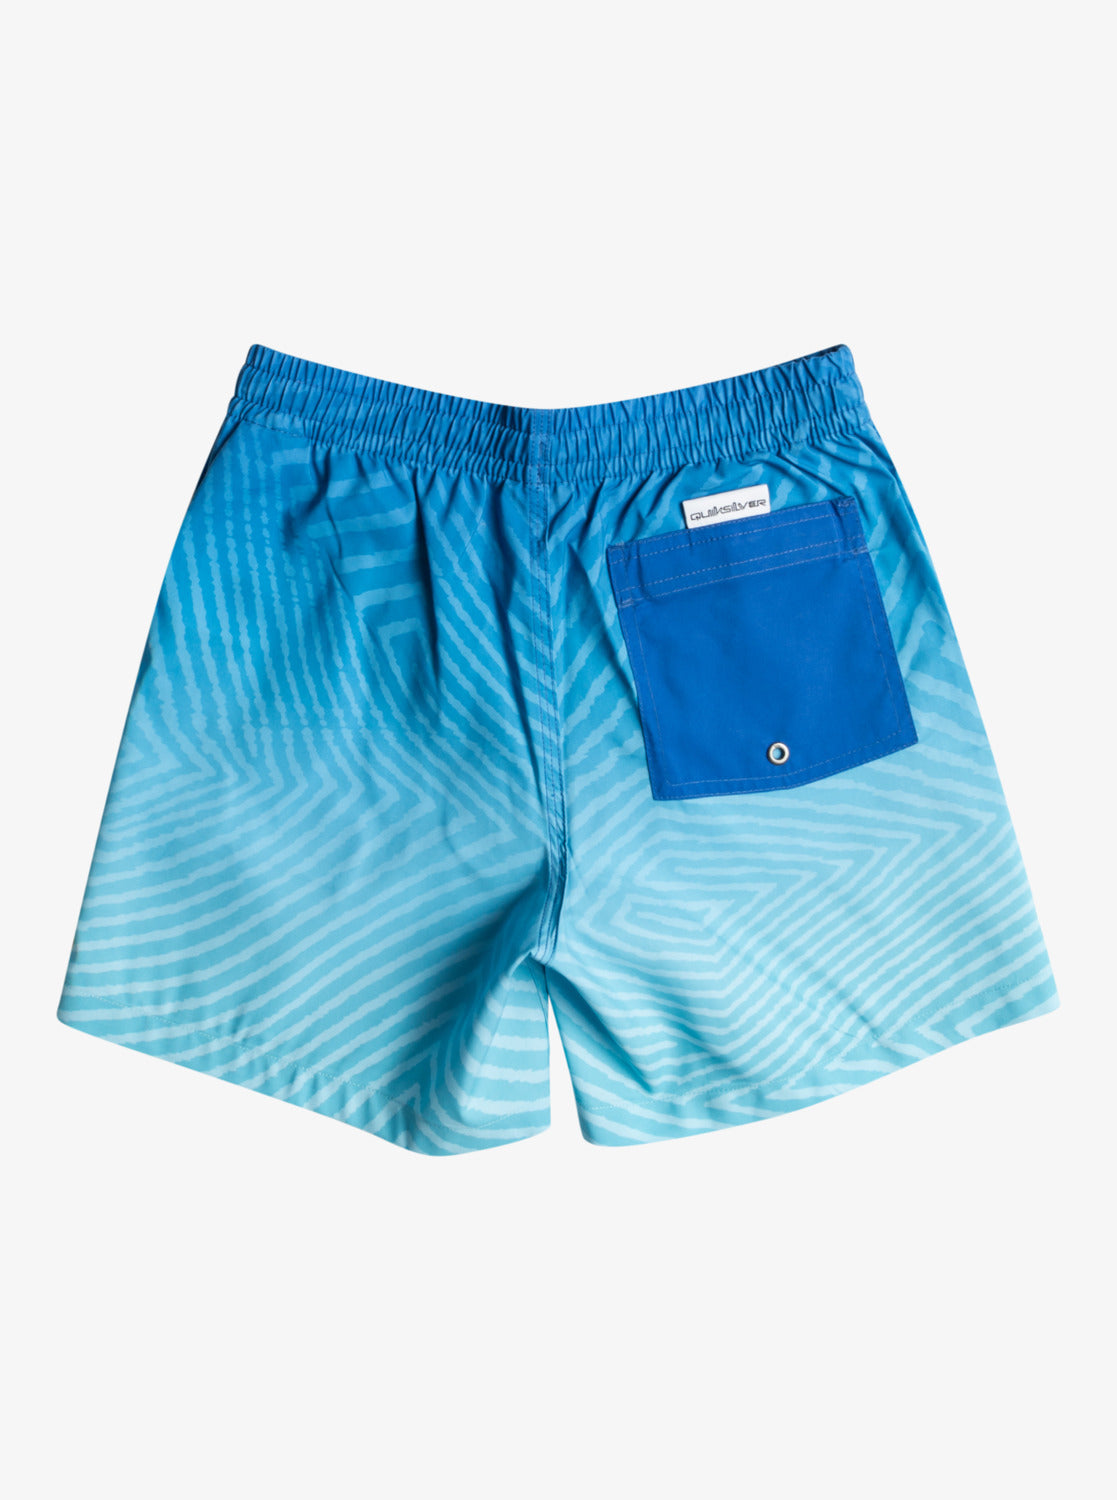 Quiksilver Everyday Warped Logo 14" - Swim Shorts in Snorkel Blue